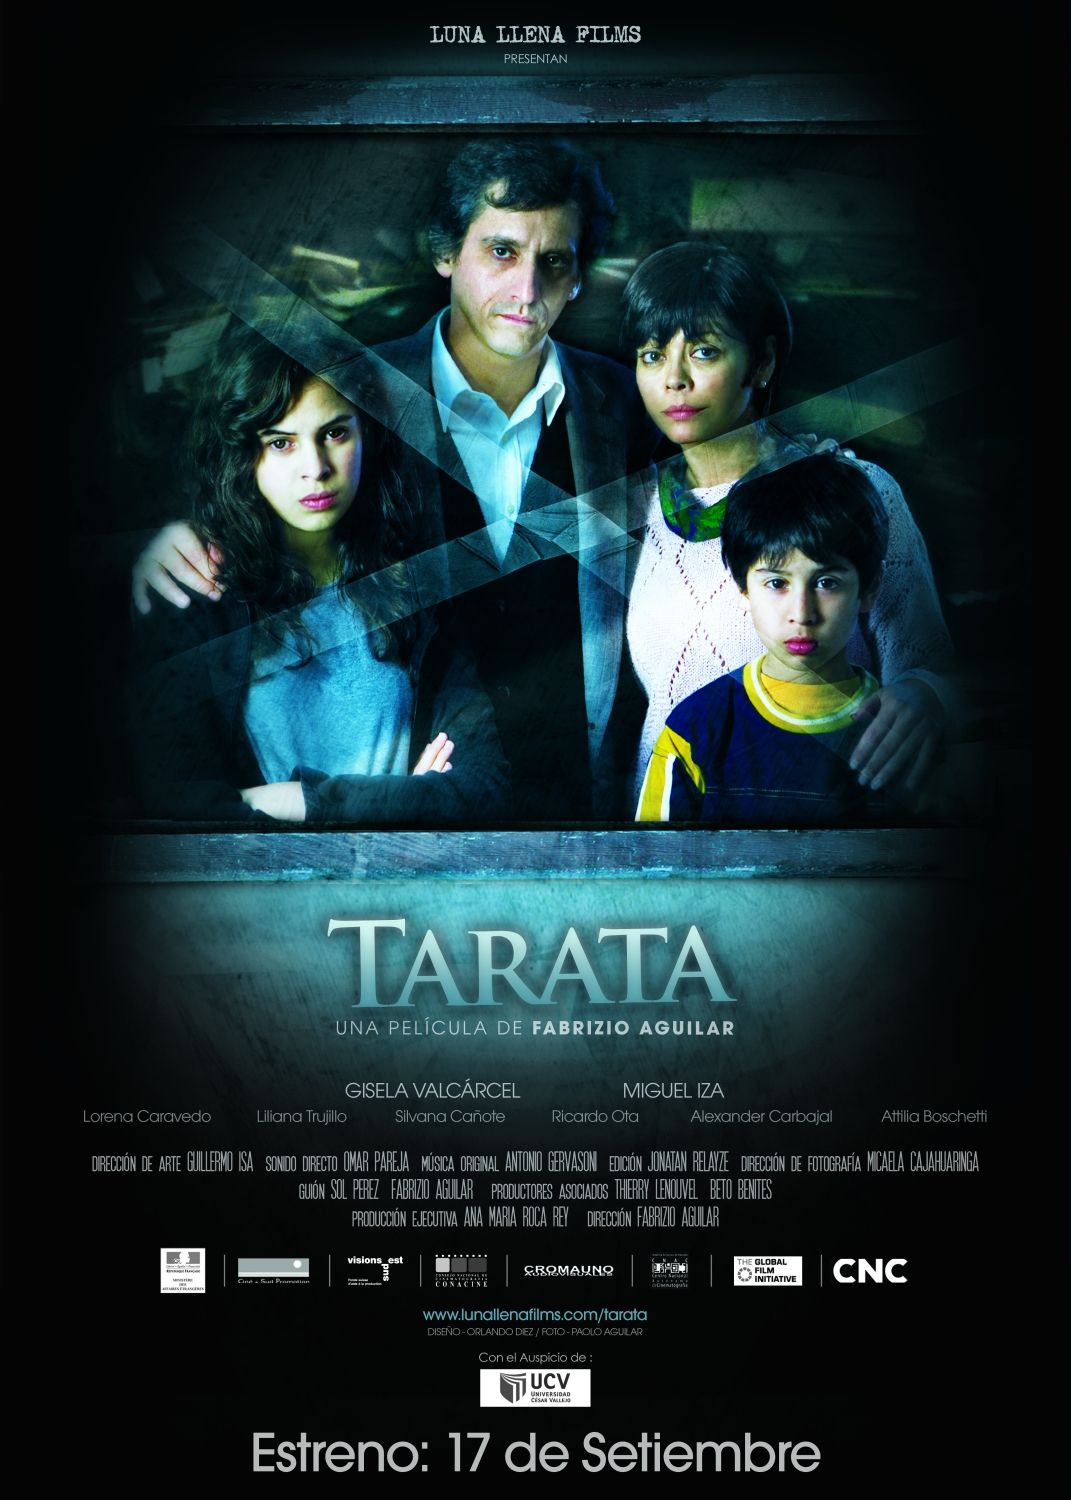 Extra Large Movie Poster Image for Tarata 